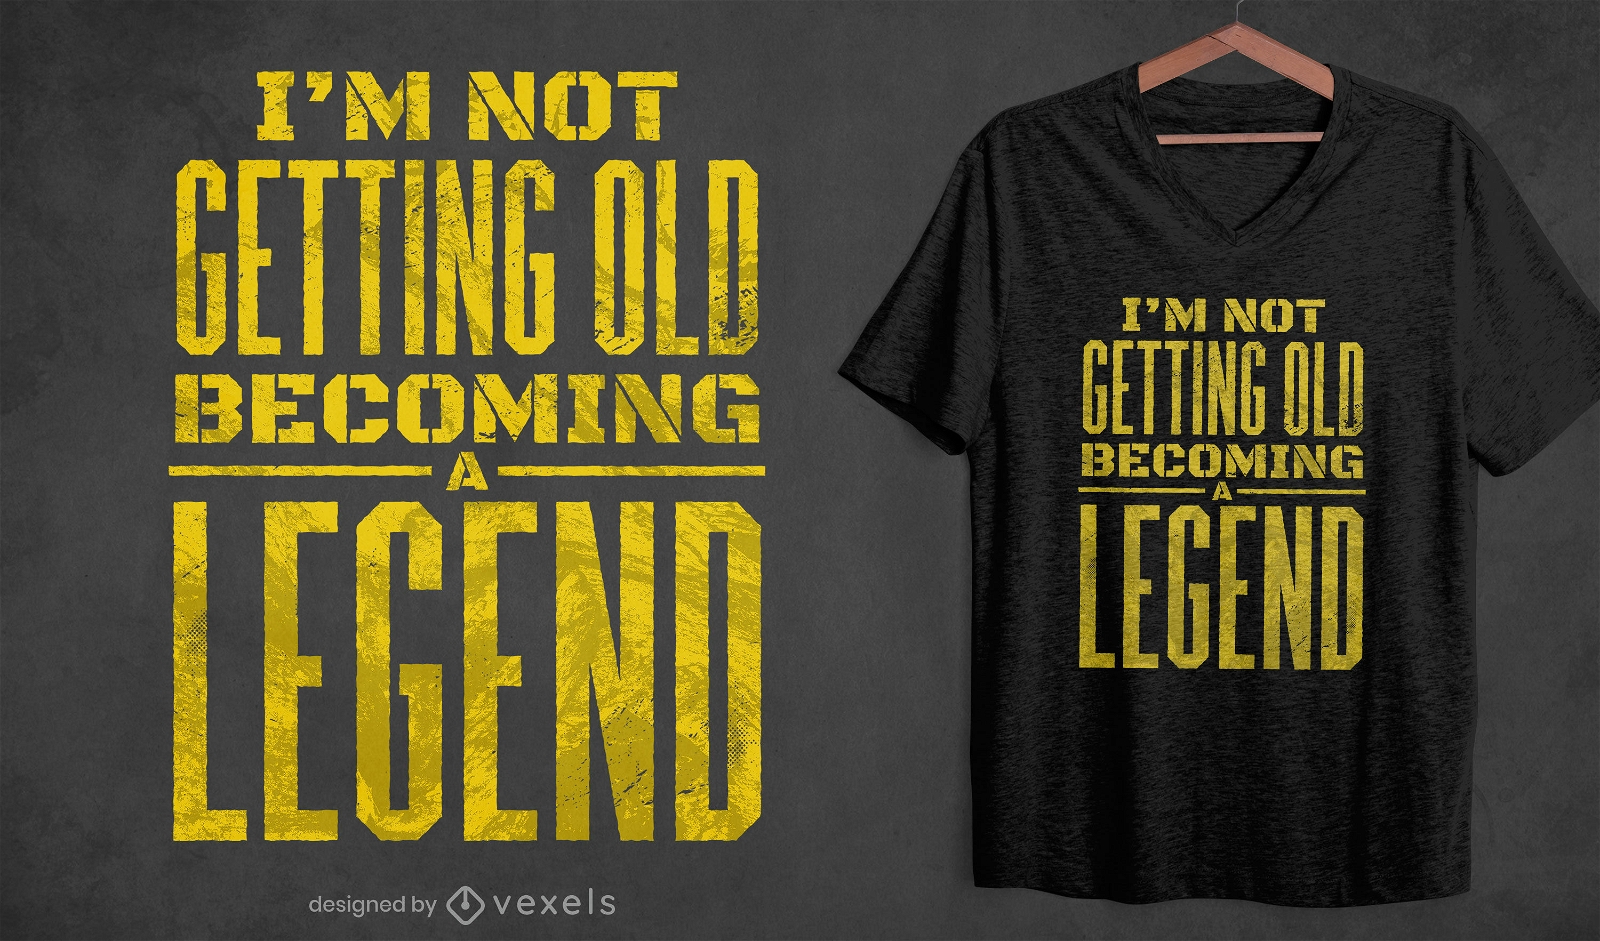 Old legend quote t-shirt design psd